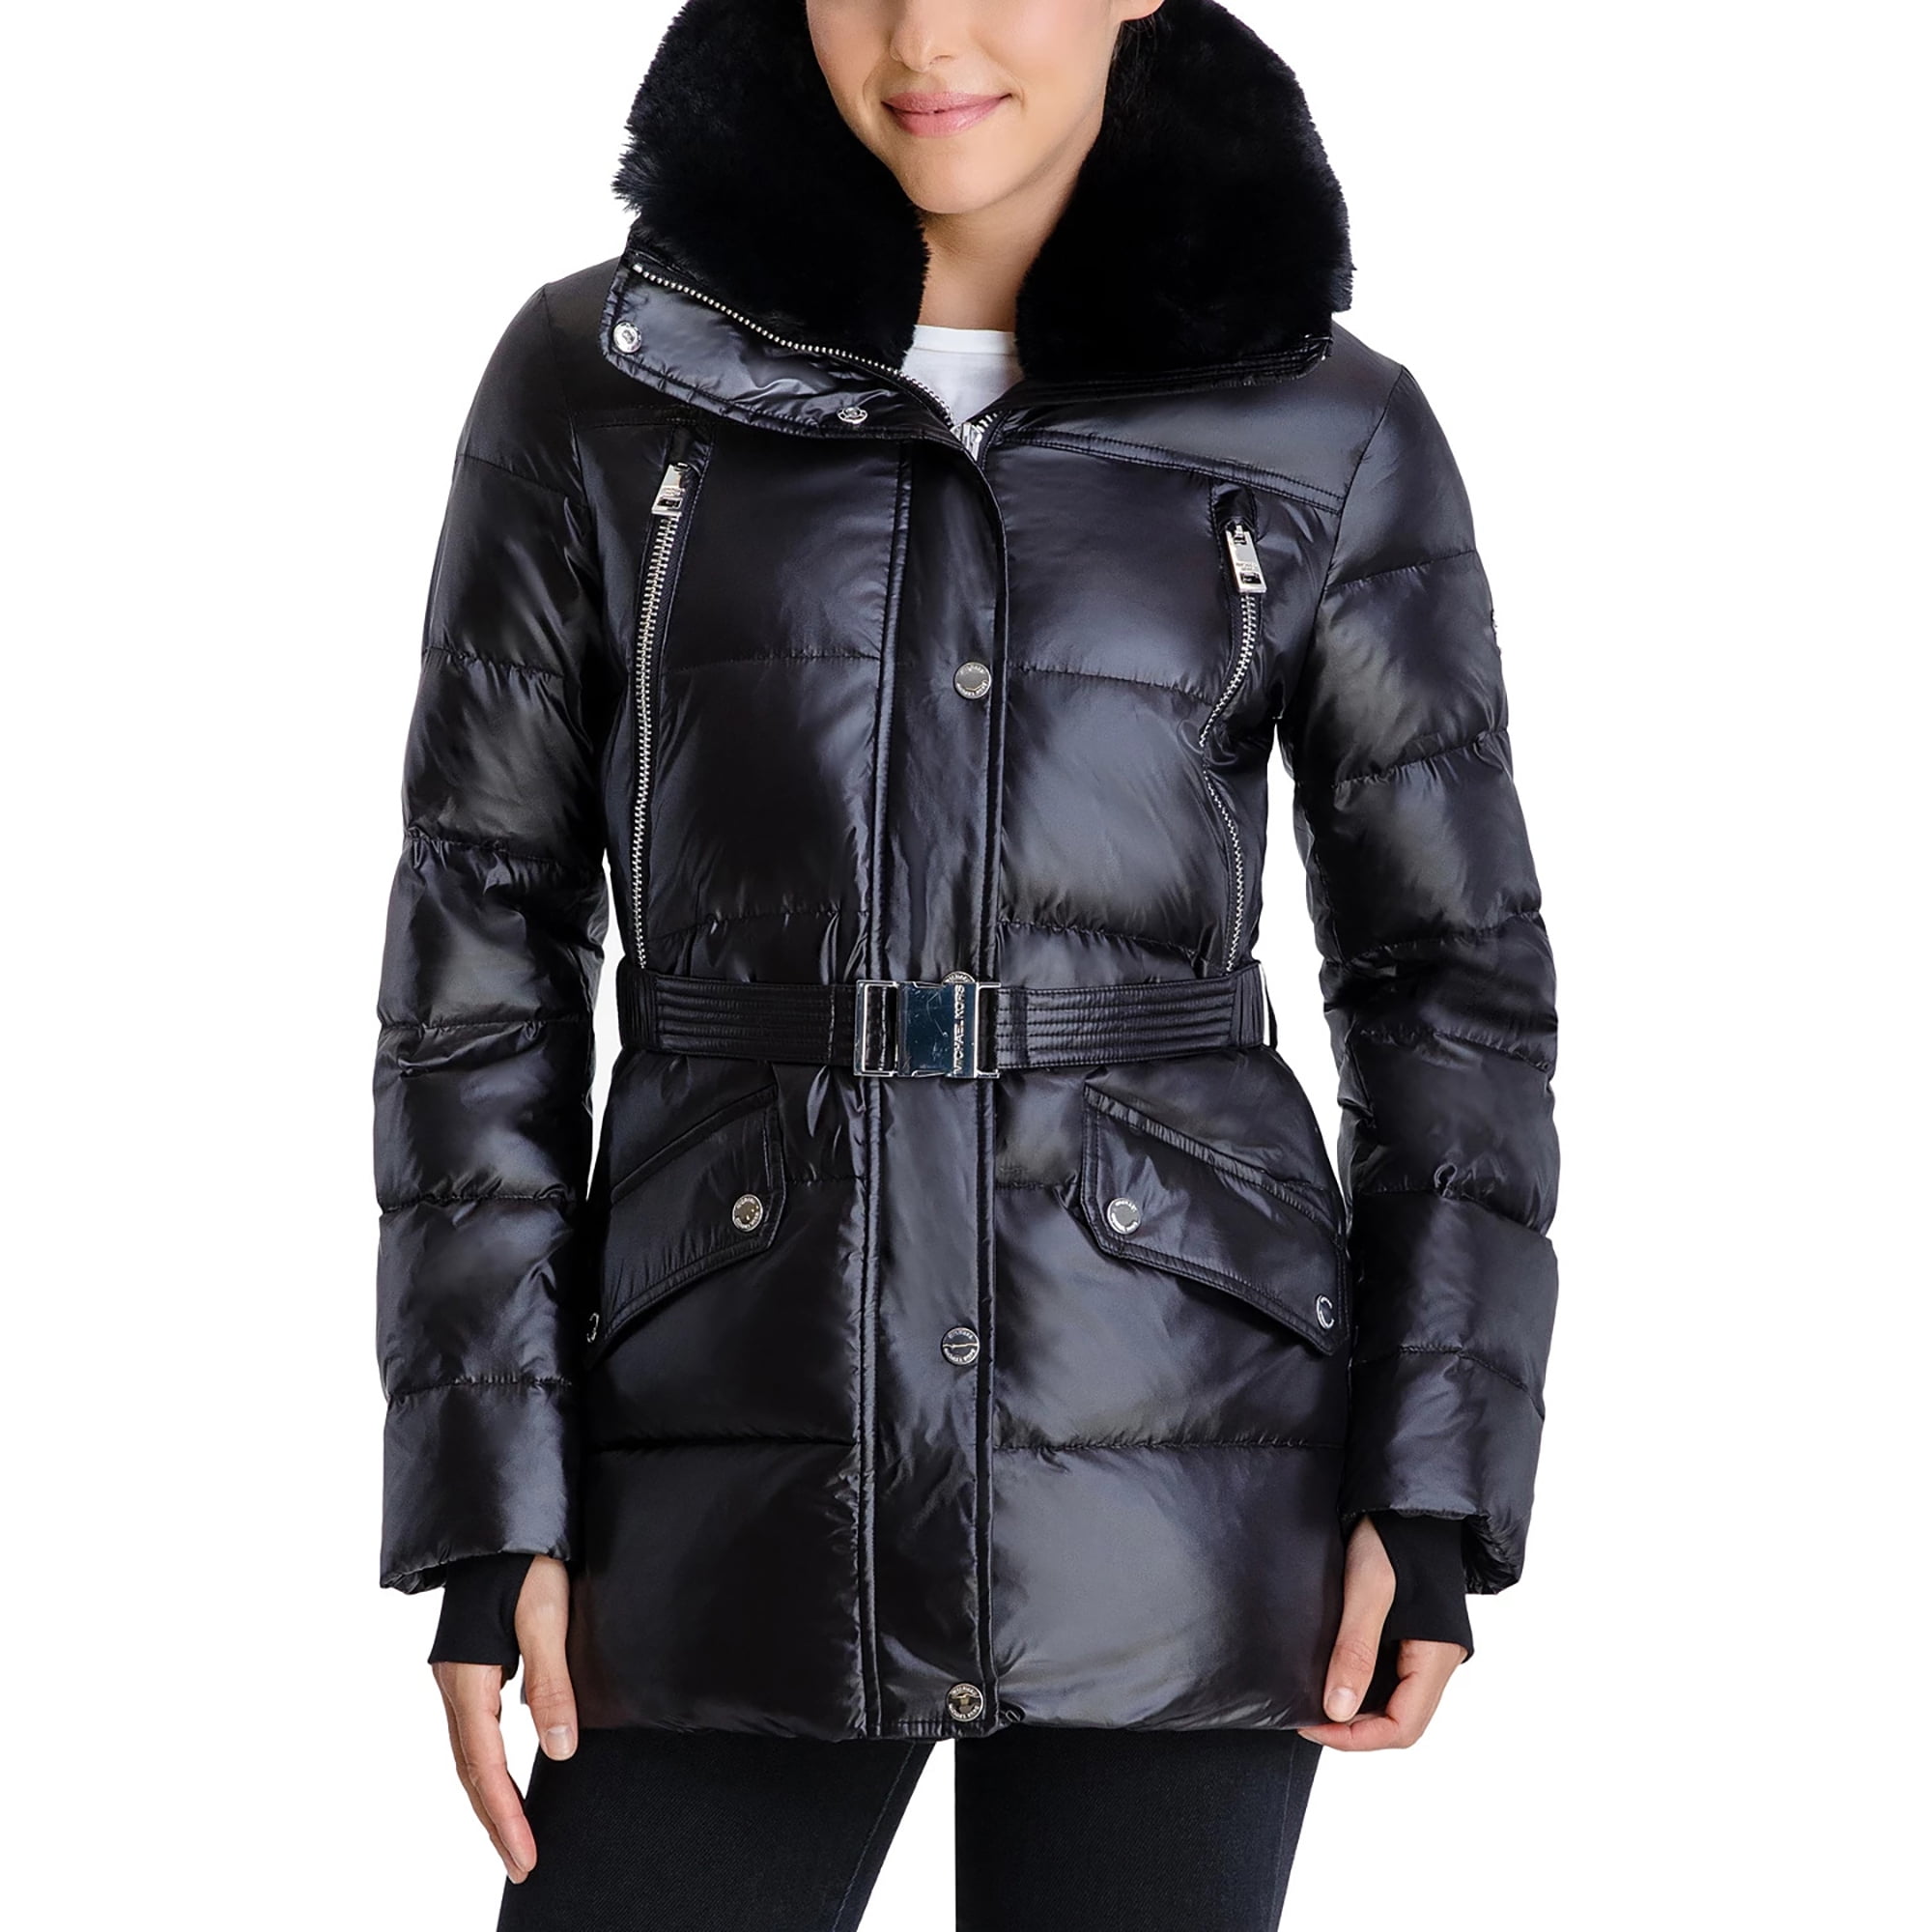 Michael Kors Women's Down Black Coat - Black Shiny Puffer Coat for Women -  Zipper Closure Women Winter Coat - Imported Women Down Coat with Adjustable  Hood, 2 Side Pockets 